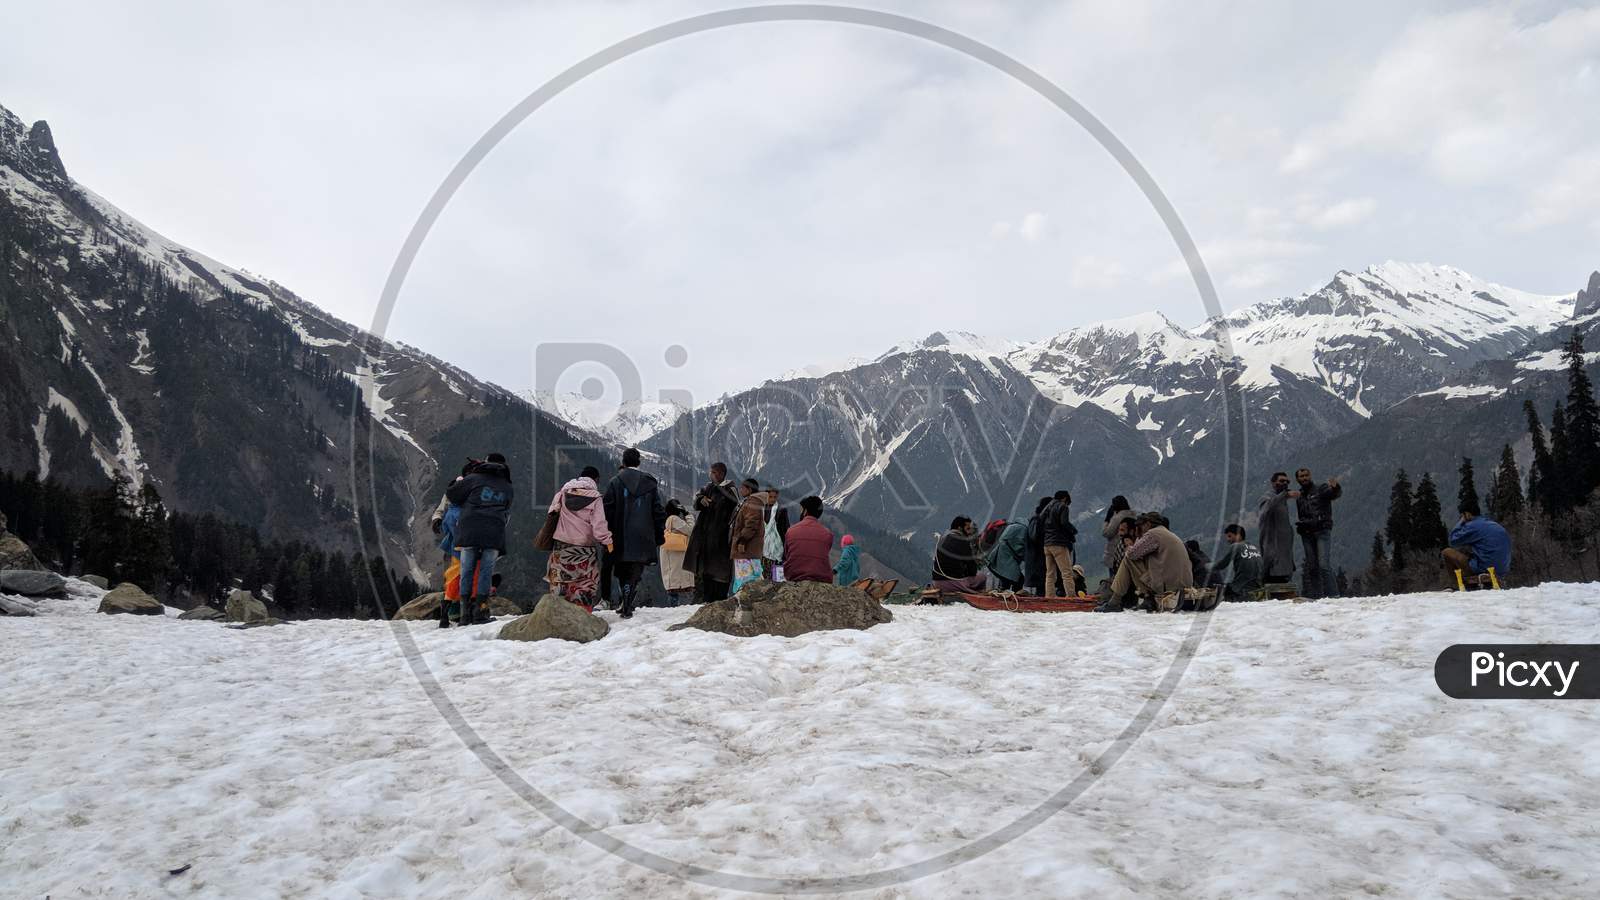 Snowy mountains in Kashmir.